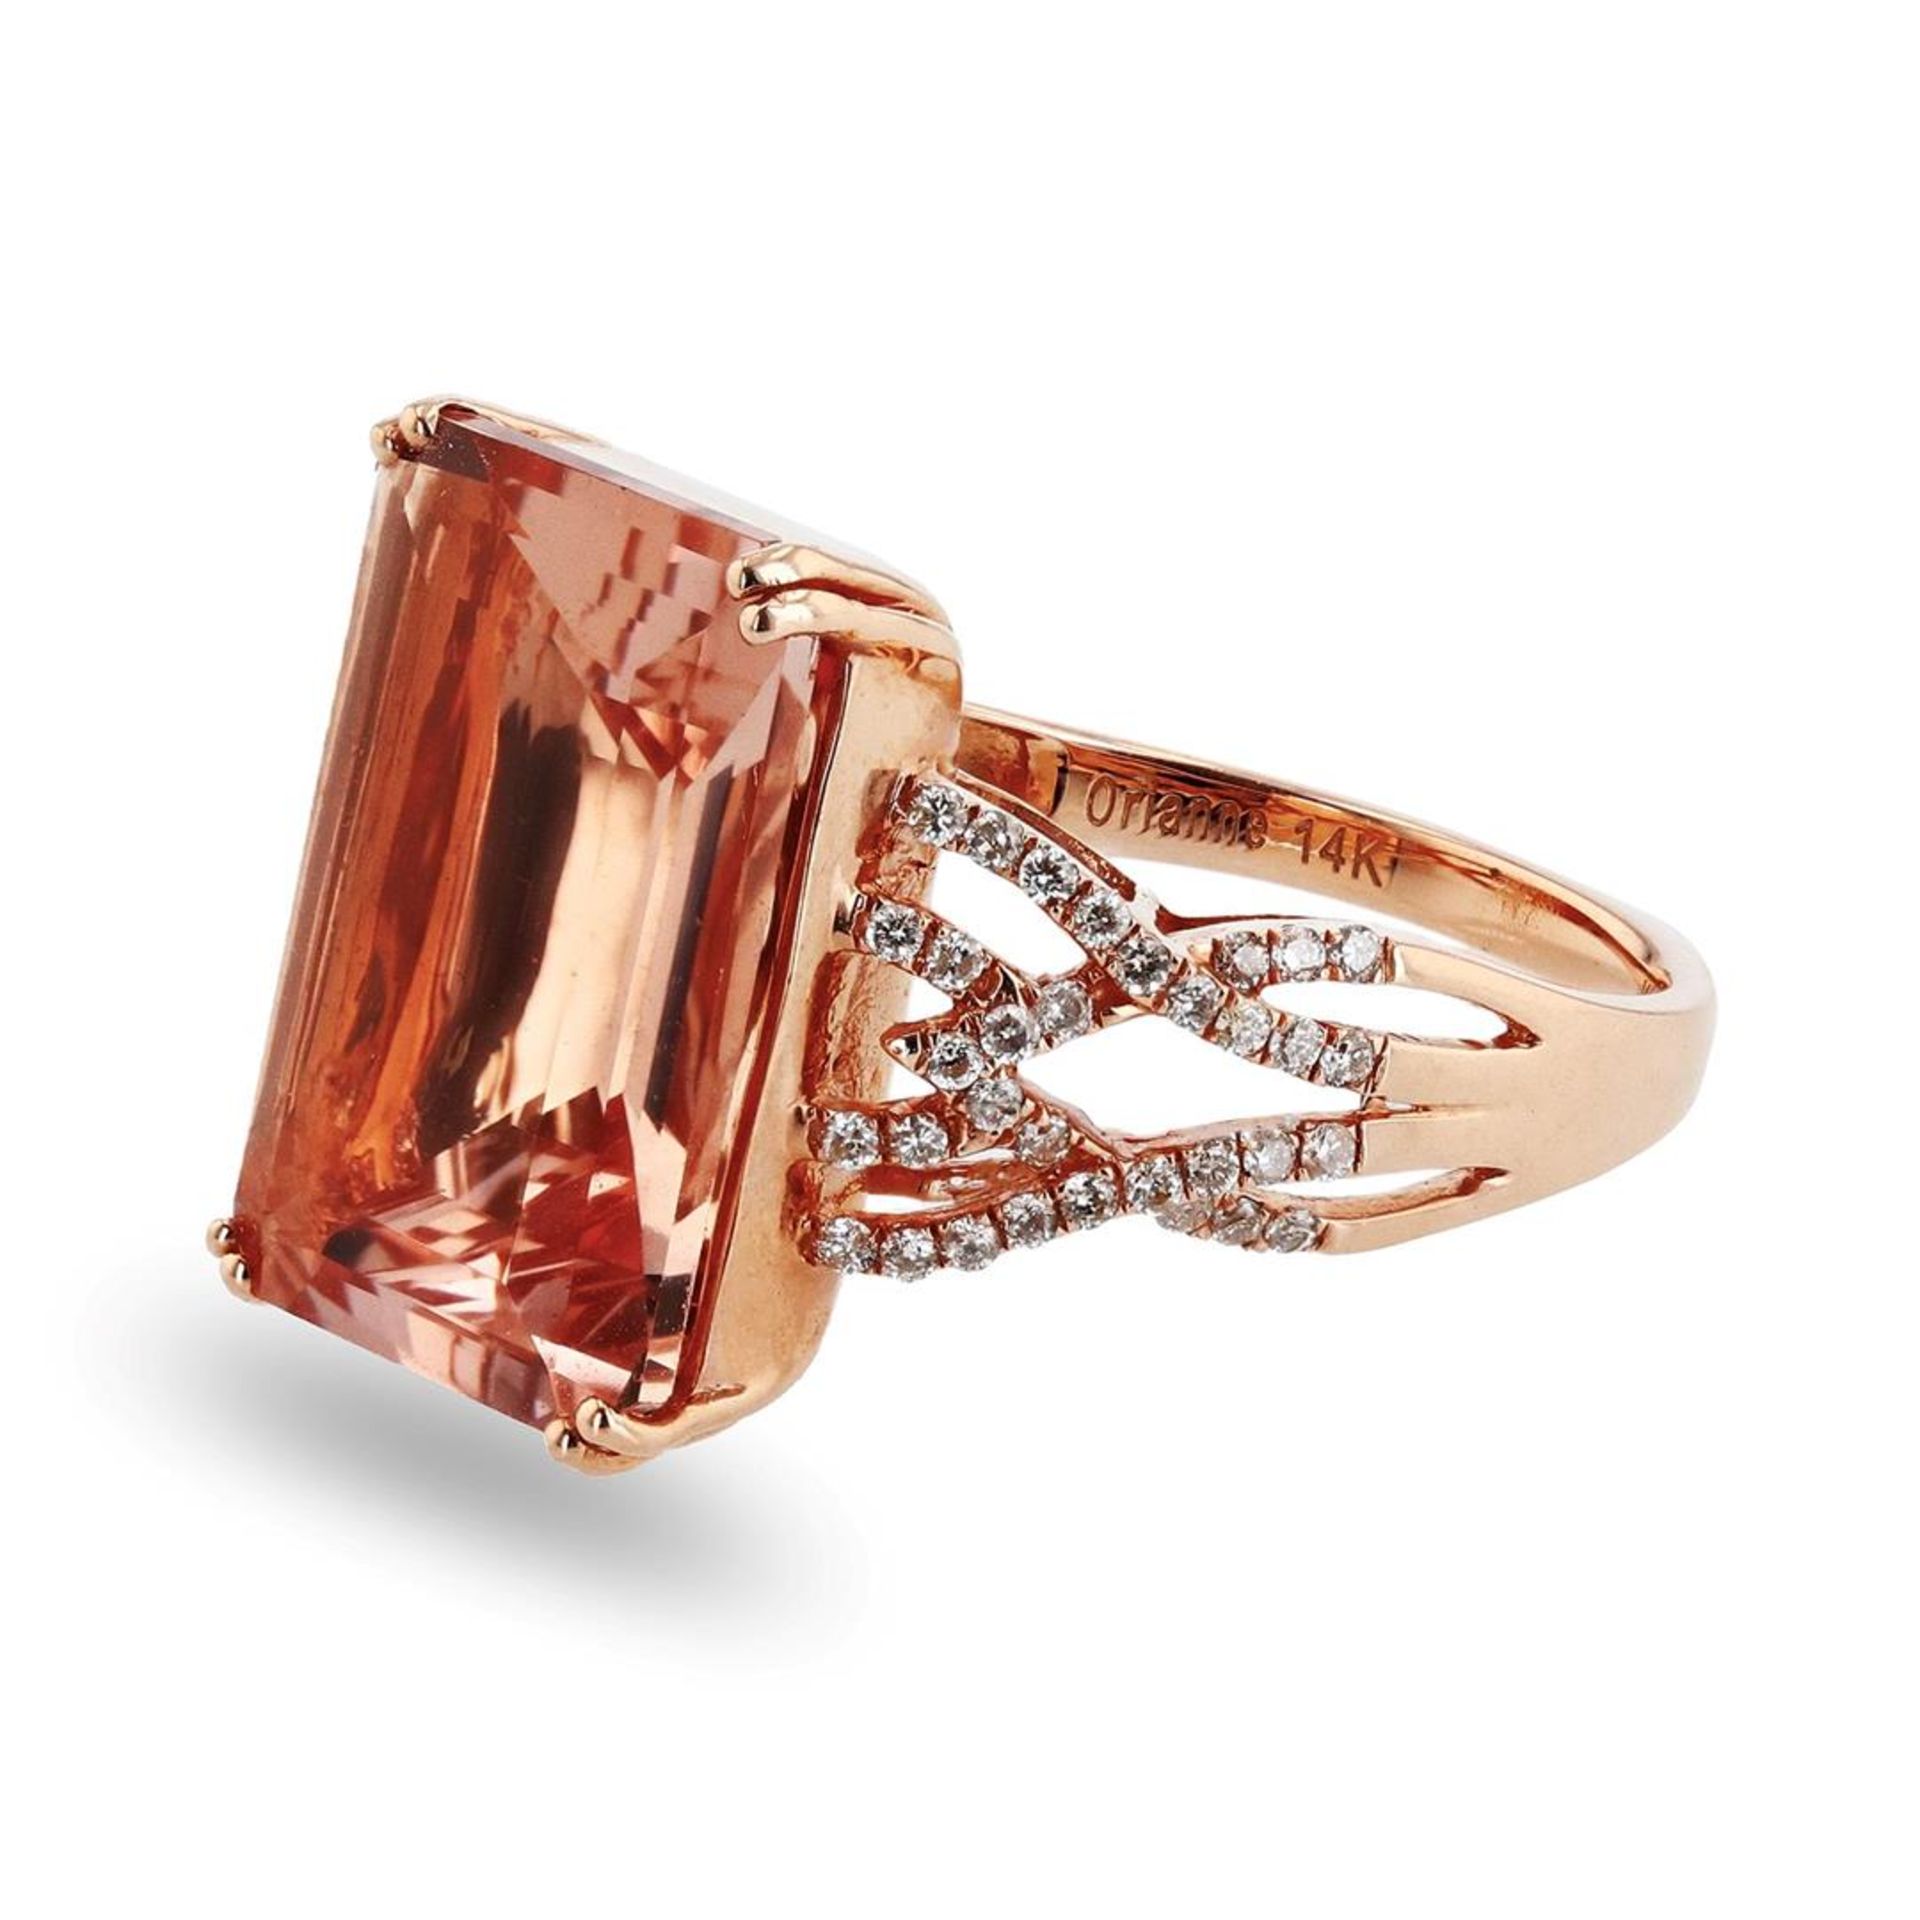 8.94ct Morganite and 0.35ctw Diamond 14K Rose Gold Ring - Image 2 of 4